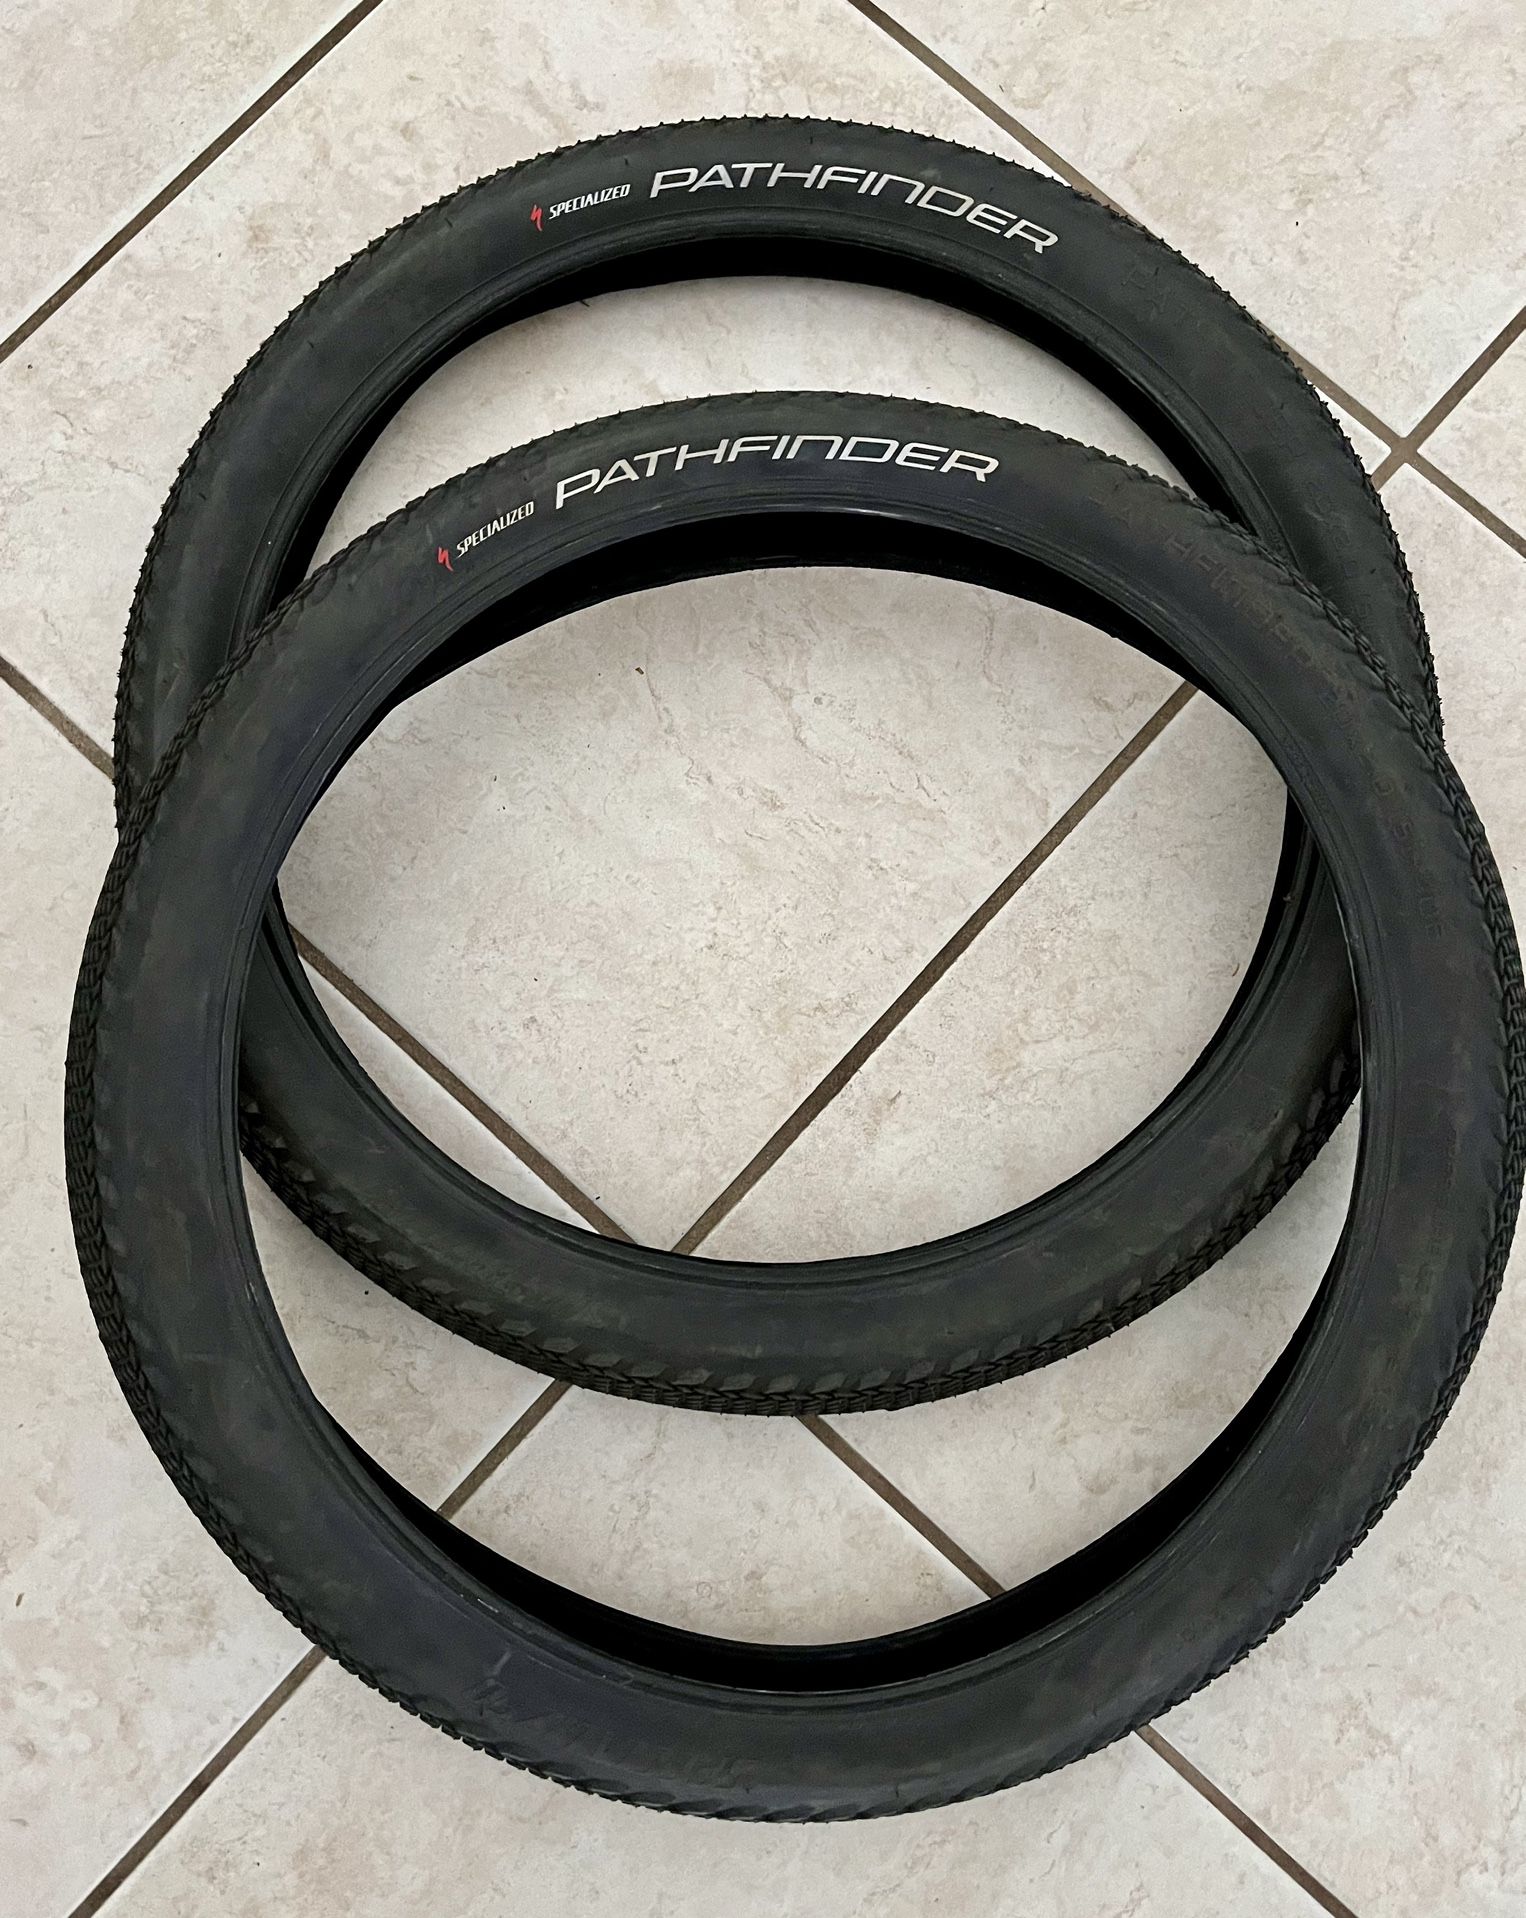 Specialized Pathfinder 20” BMX Tires 